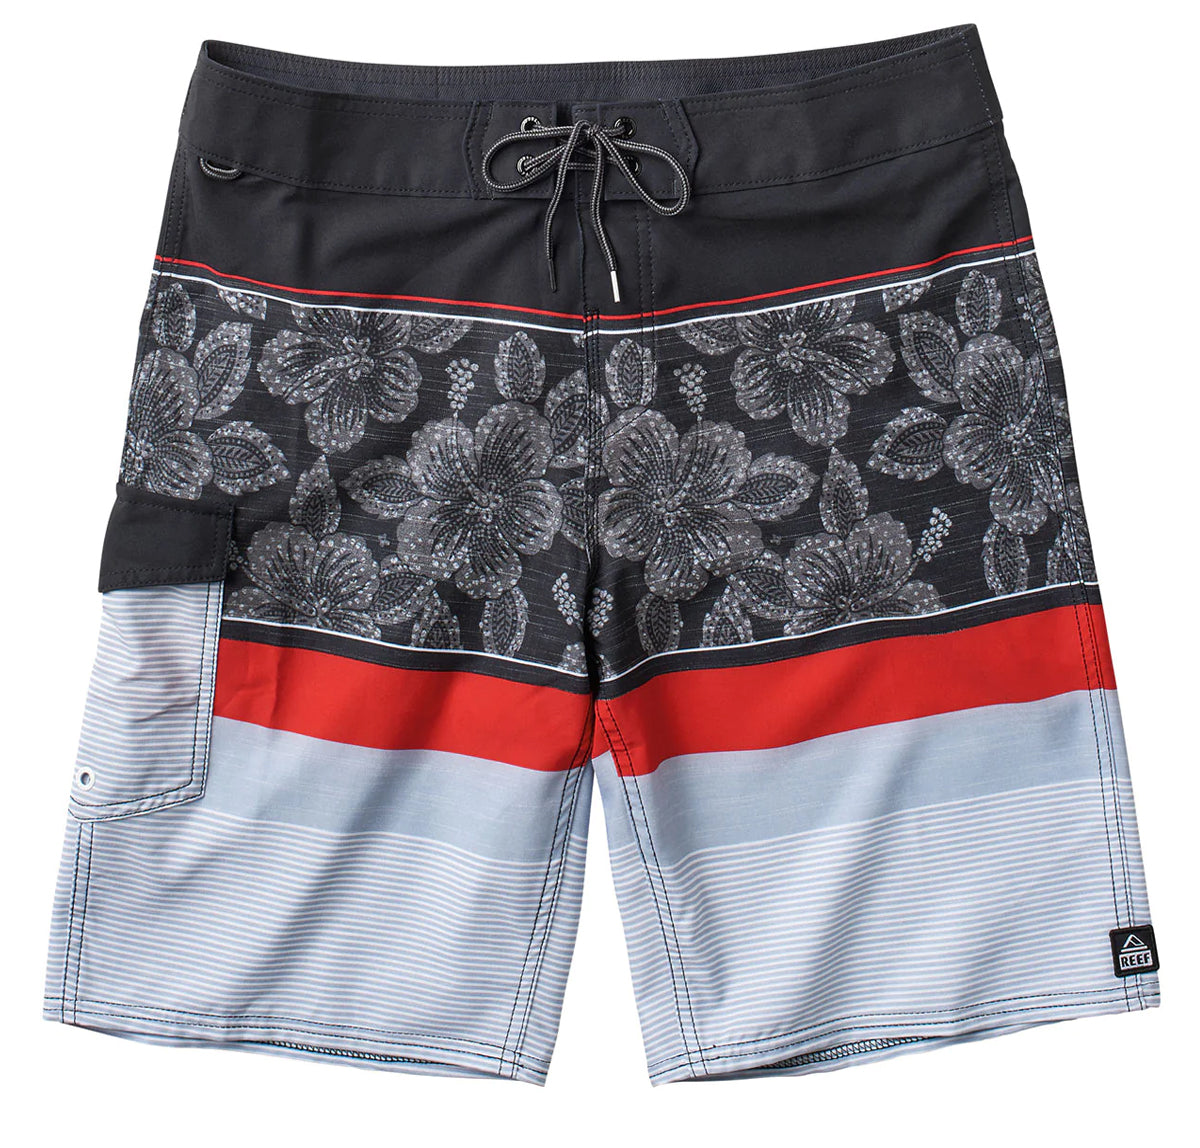 Reef Mali Floral Men's Boardshort Shorts